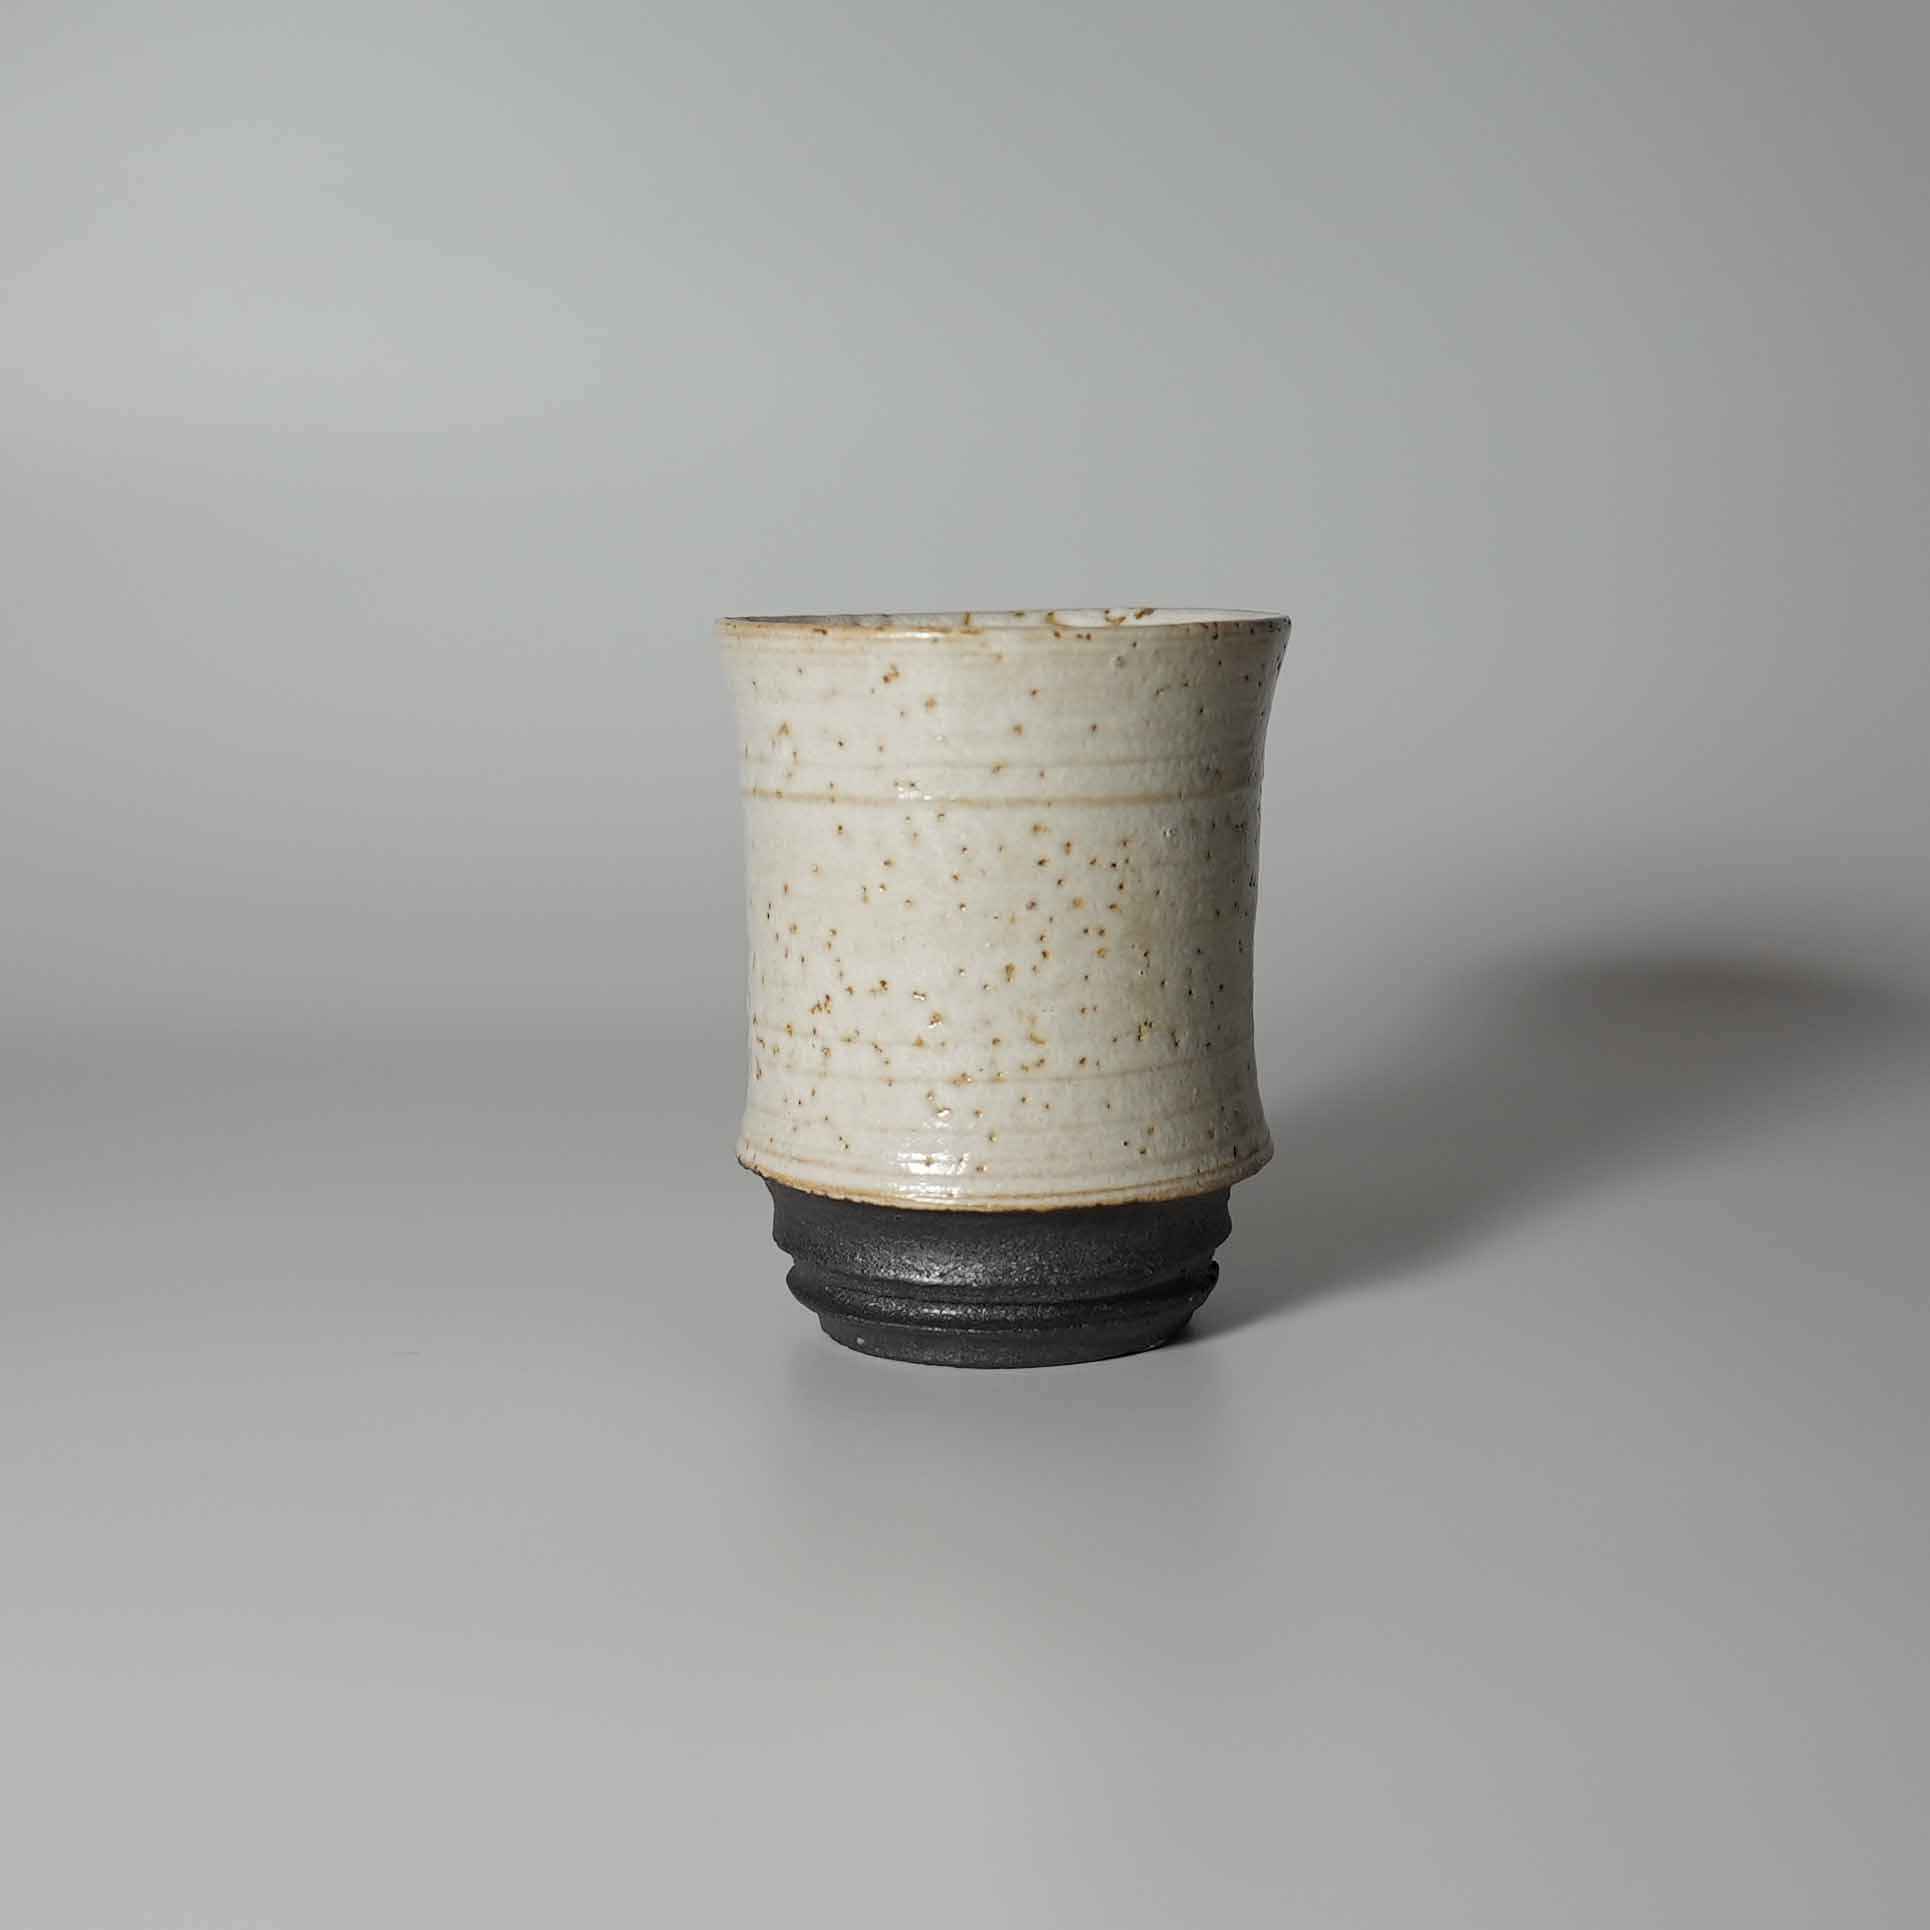 hagi-hasi-cups-0054